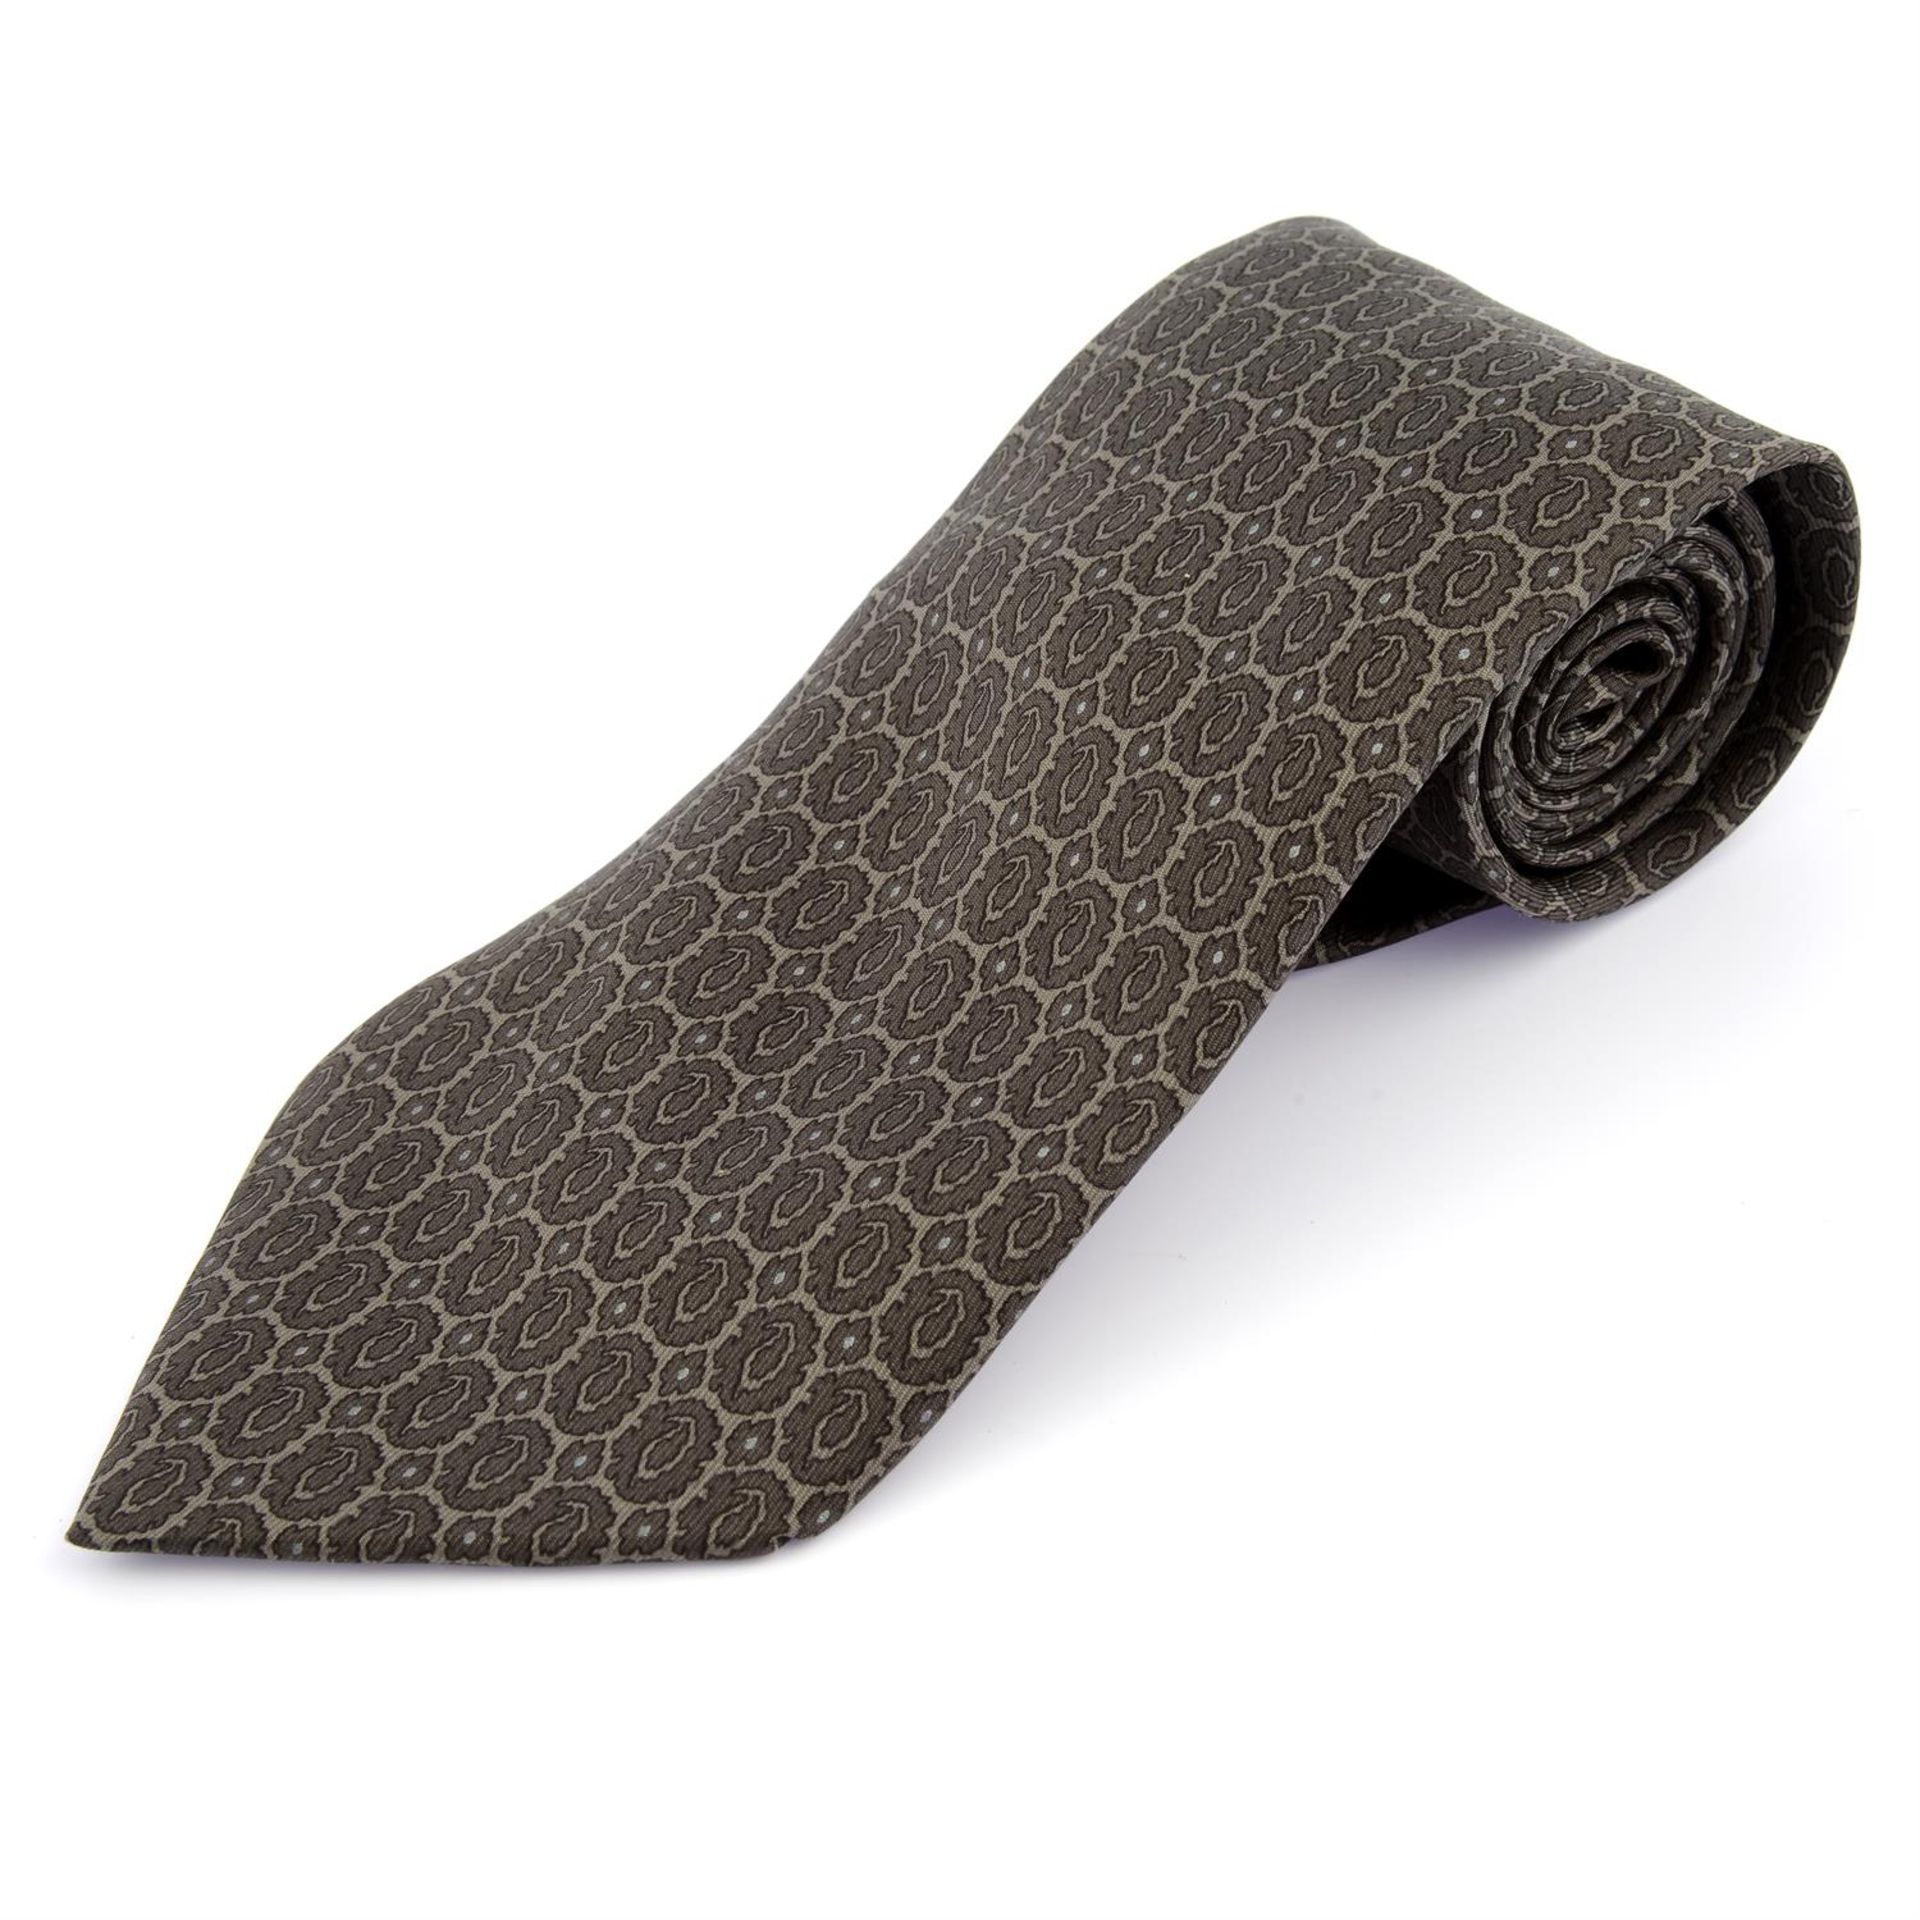 HERMÈS - a light brown printed silk tie.